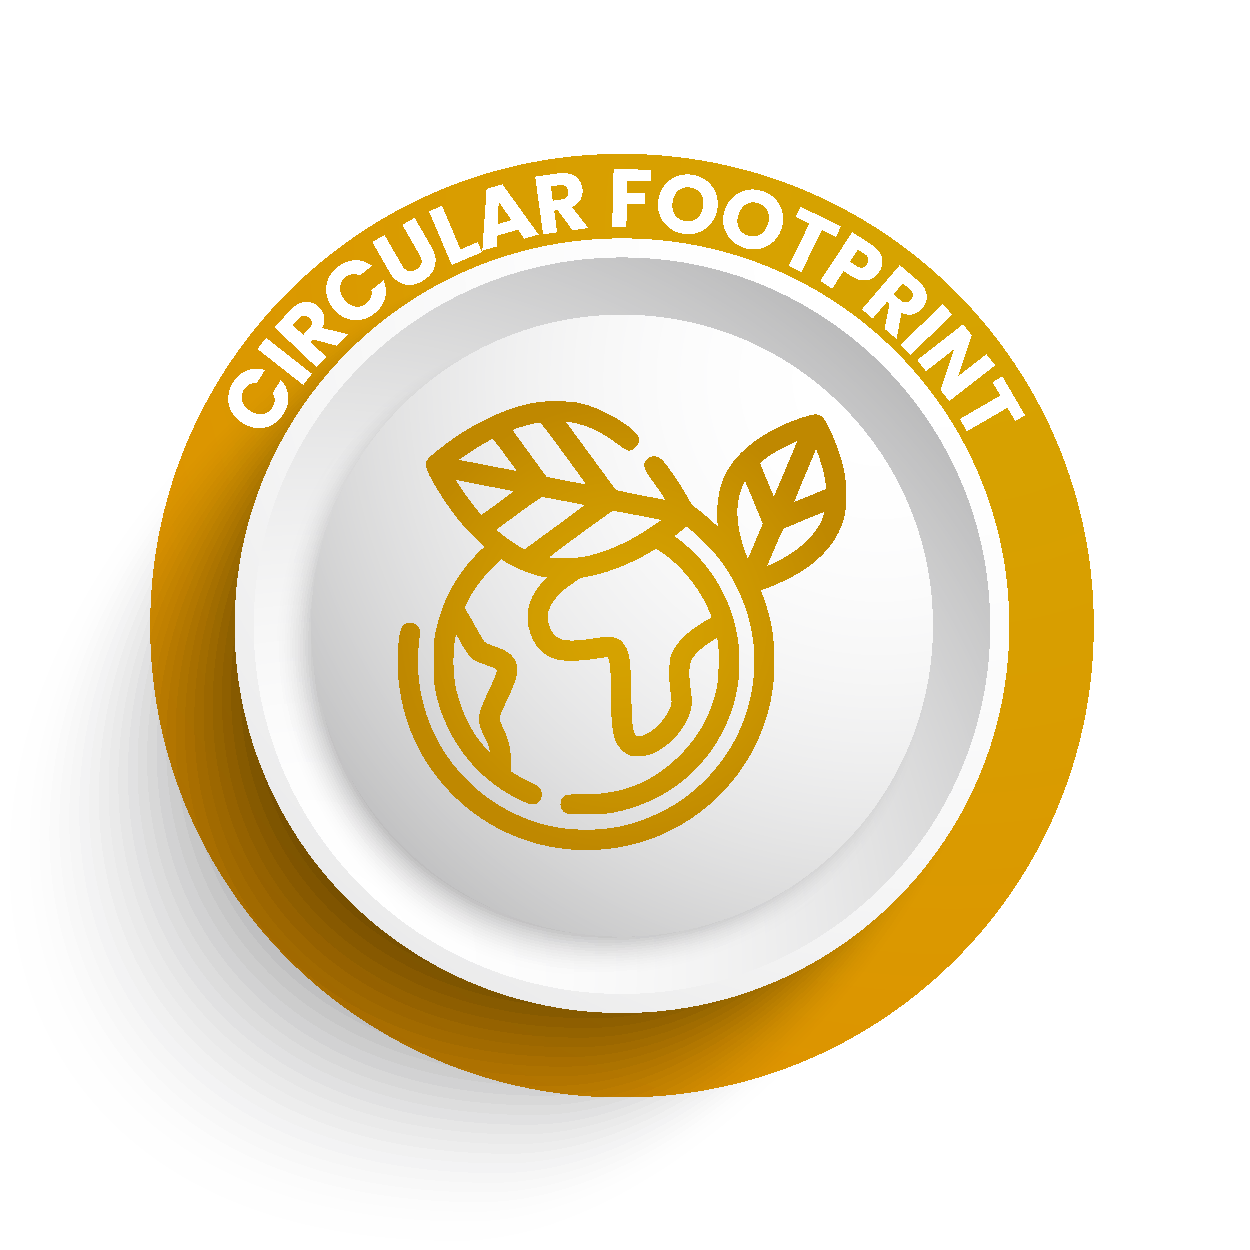 Circular Footprint